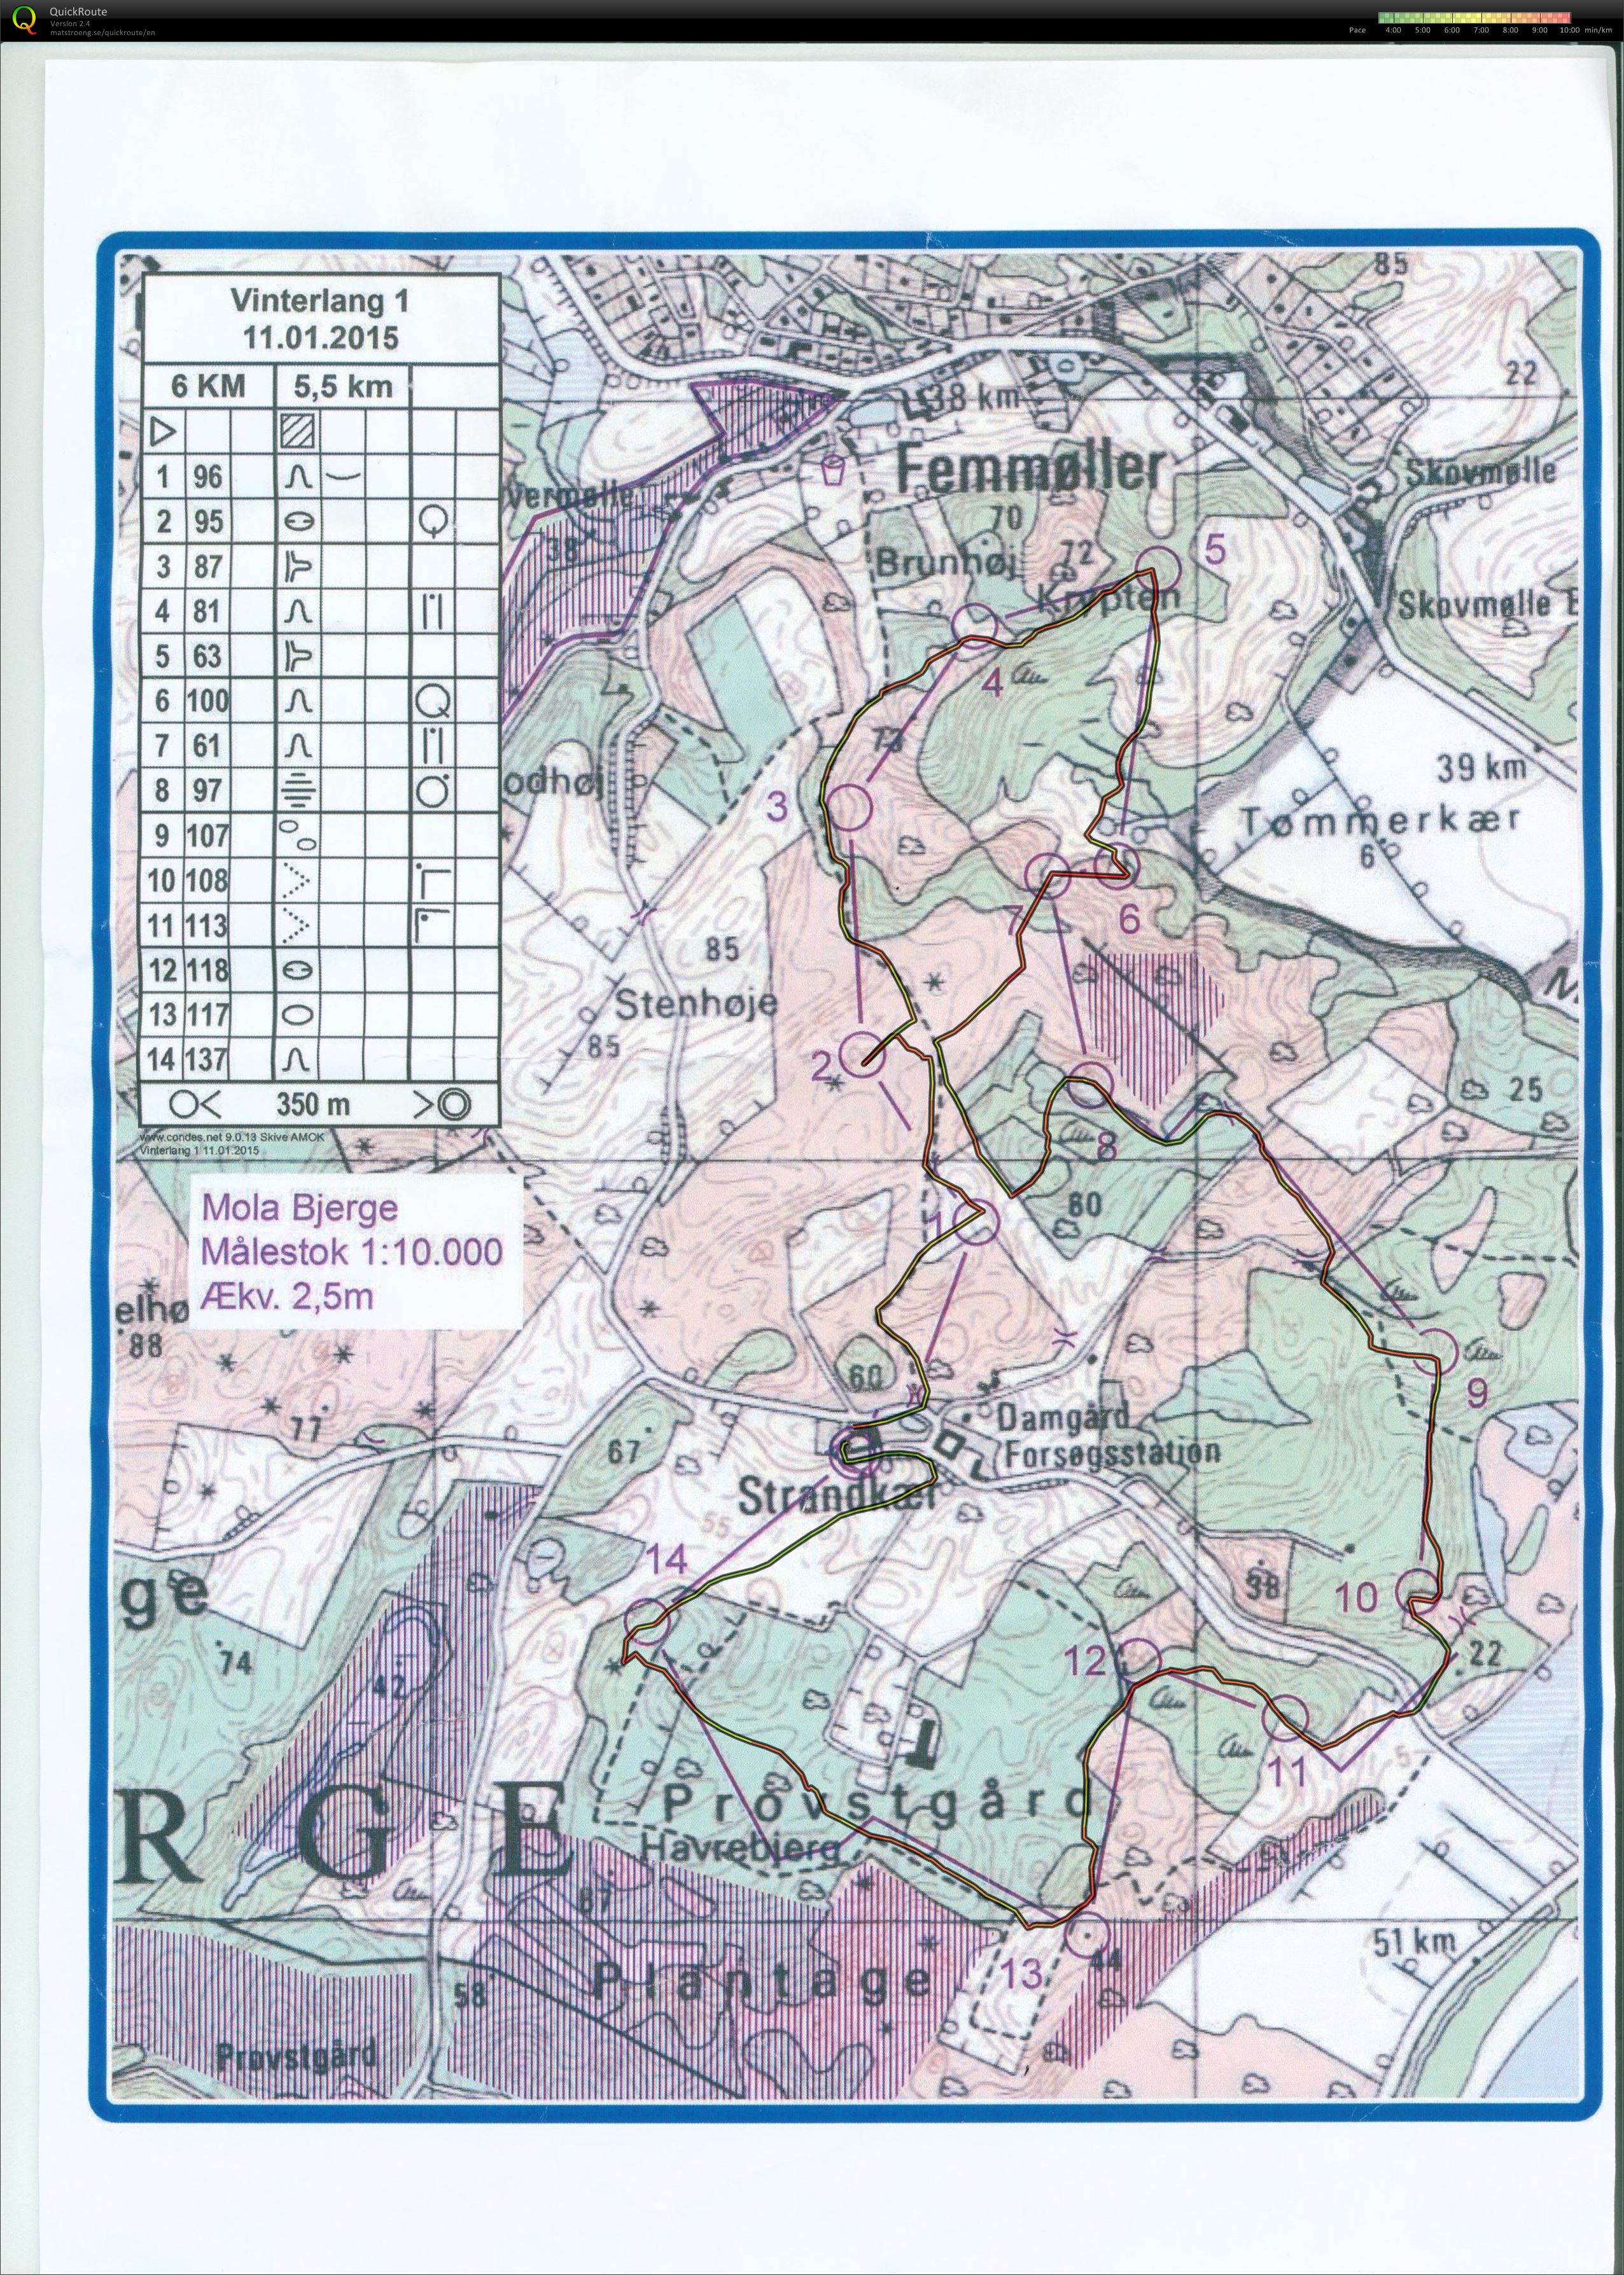 Mols Bjerge, Langdistance 1, 6 km, Pia Gade, 110115 (11.01.2015)